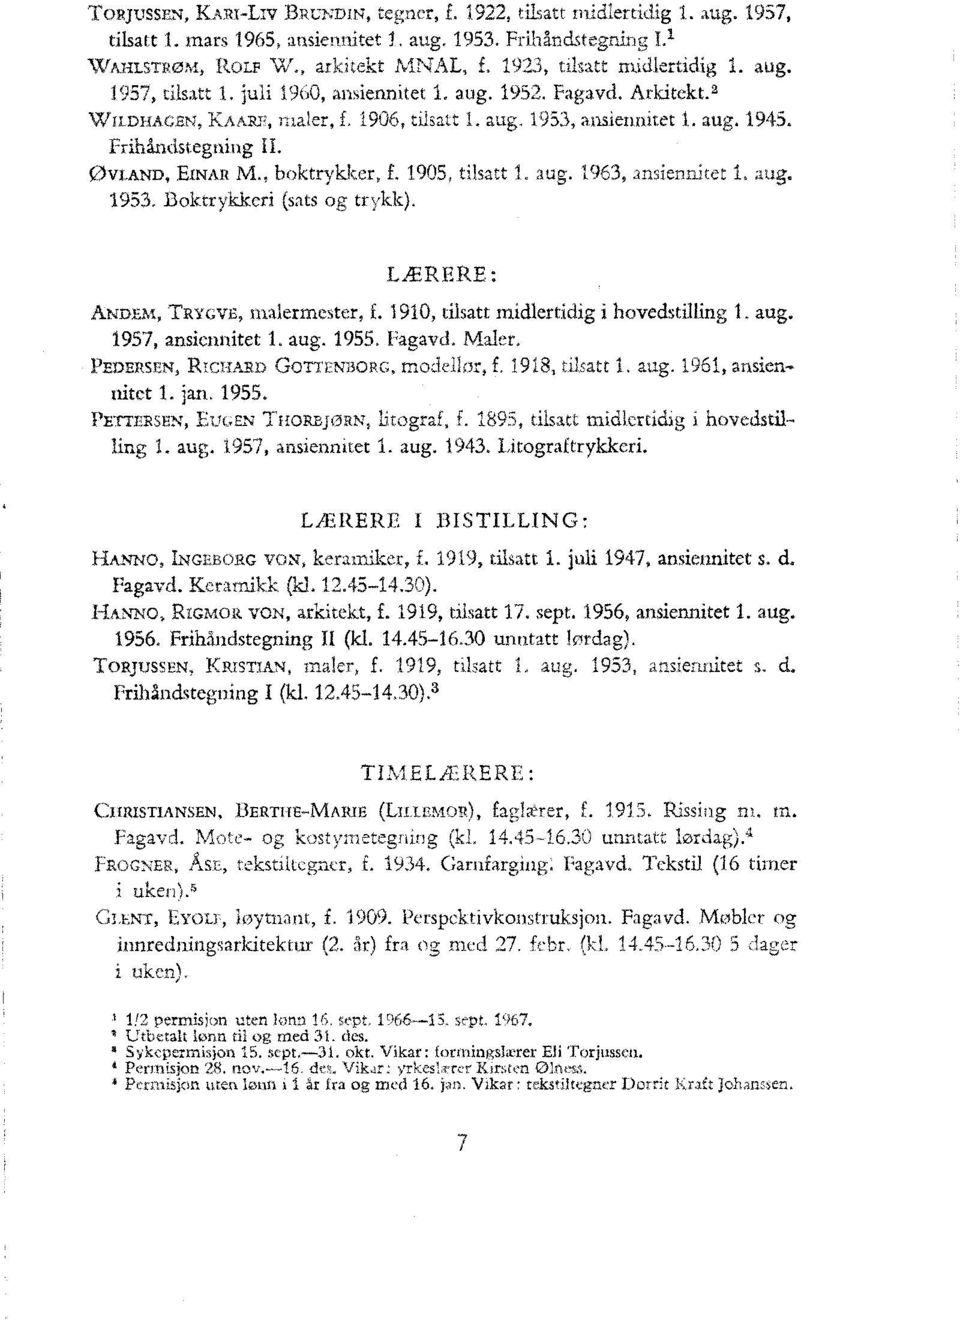 Frihåndstegning II. ØVLAND, EINAR M., boktrykker, f. 1905, tilsatt 1. aug. 1963, ansiermitet 1. aug. 1953. Boktrykkeri (sats og trykk). LÆRERE: ANDEM, TRYGVE, malermester, f.